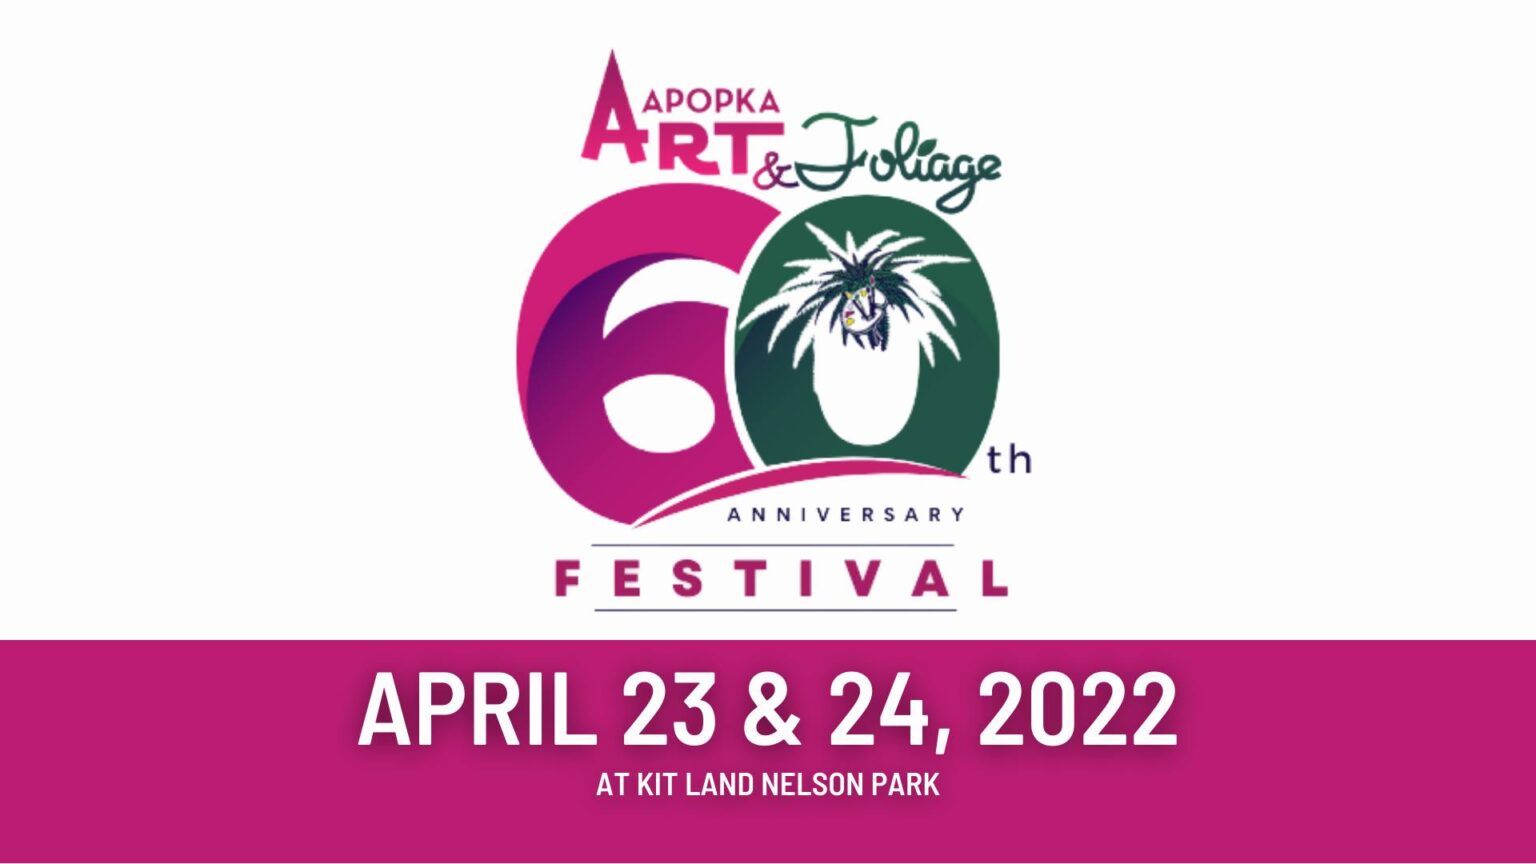 Apopka Art & Foliage Festival 60th Anniversary Bungalower